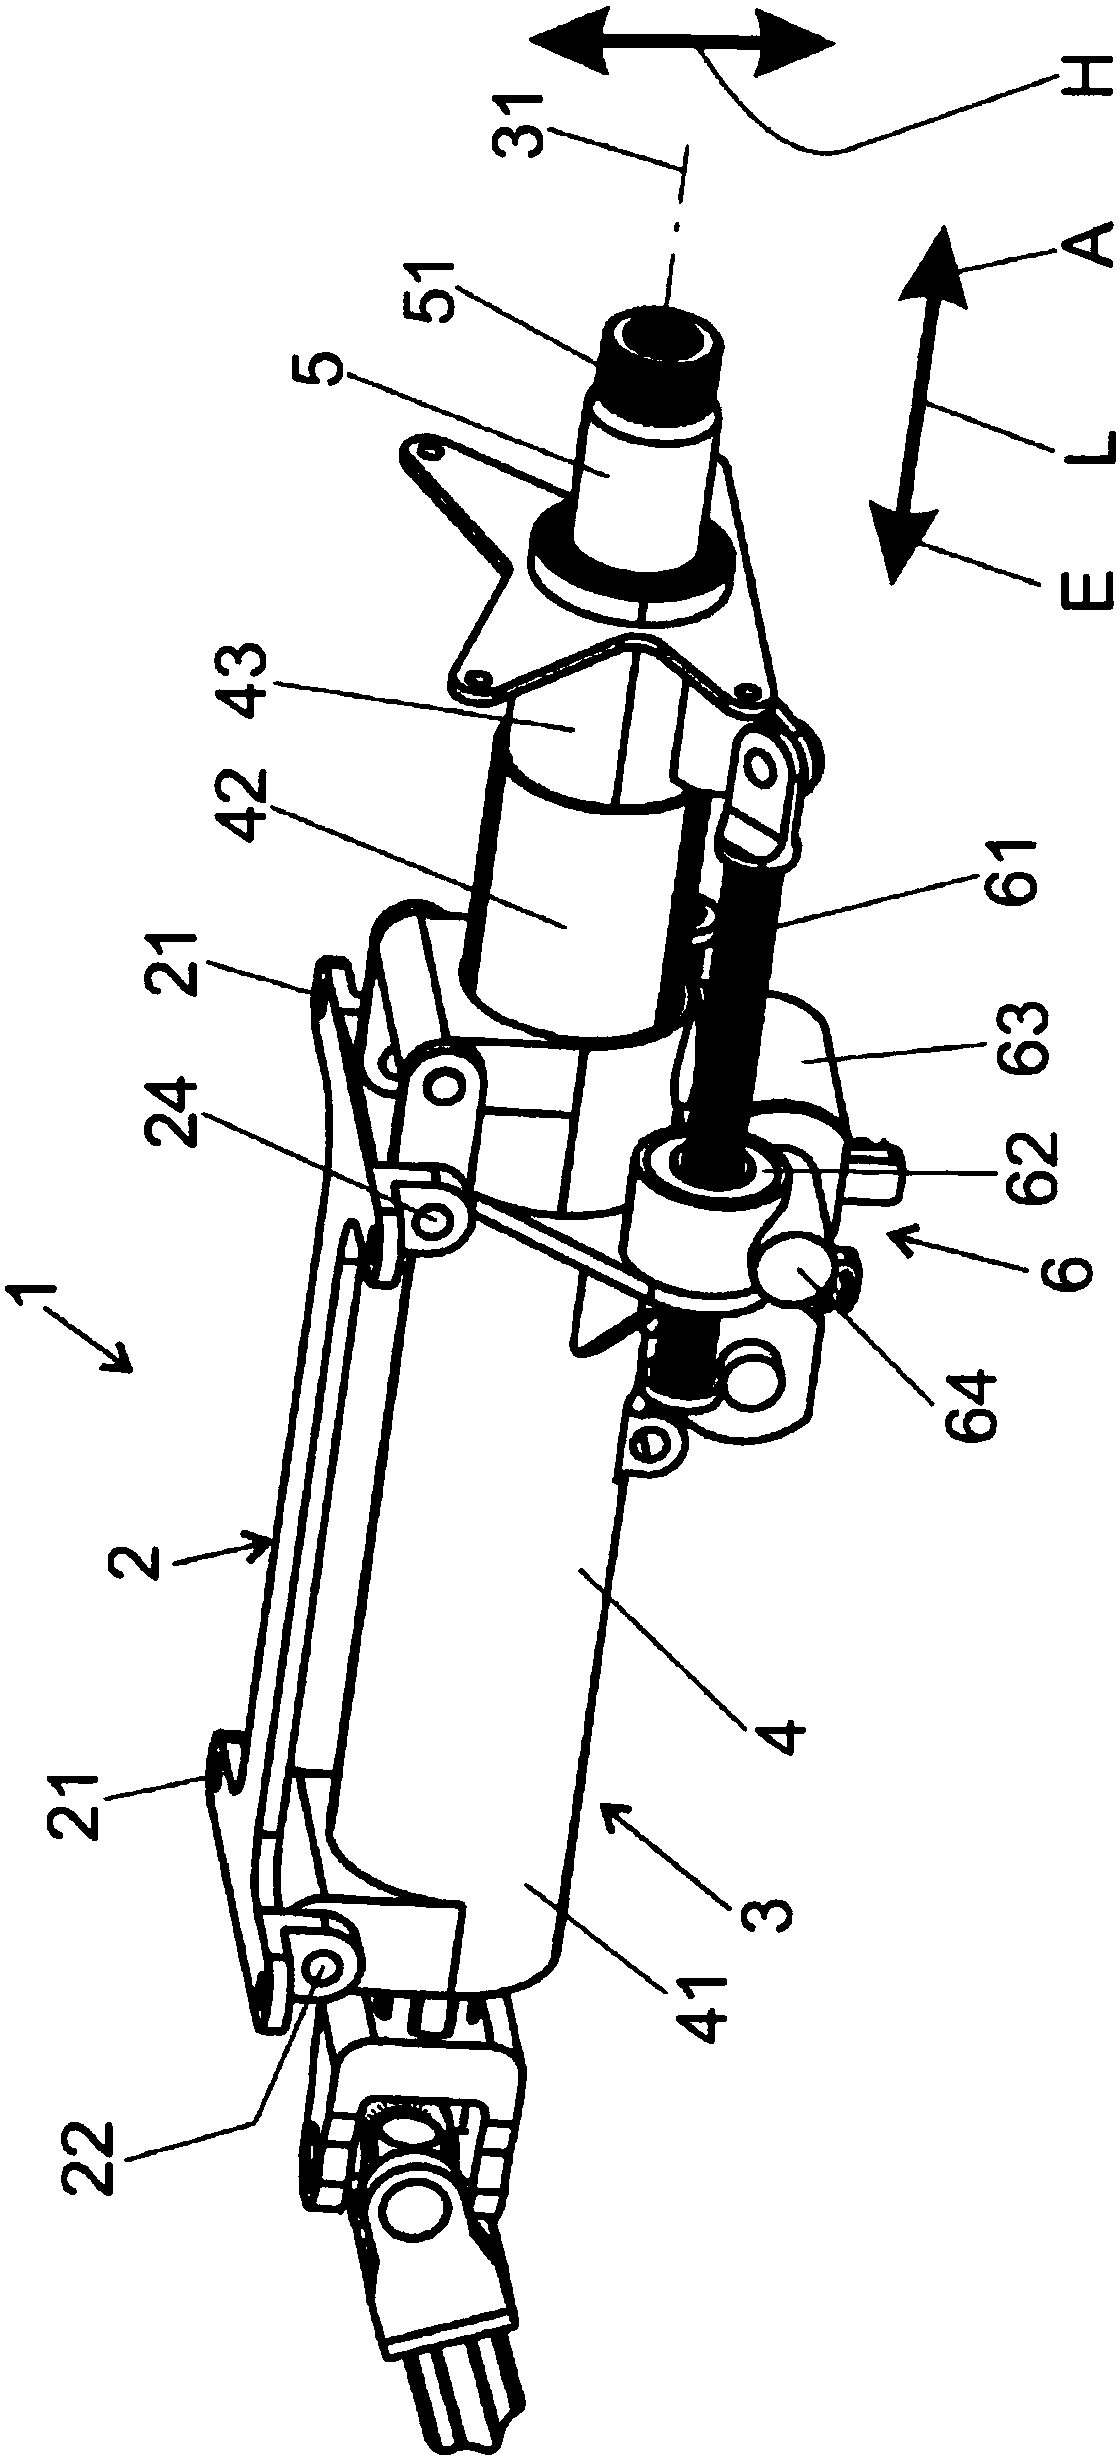 Motor-adjustable steering column for a motor vehicle